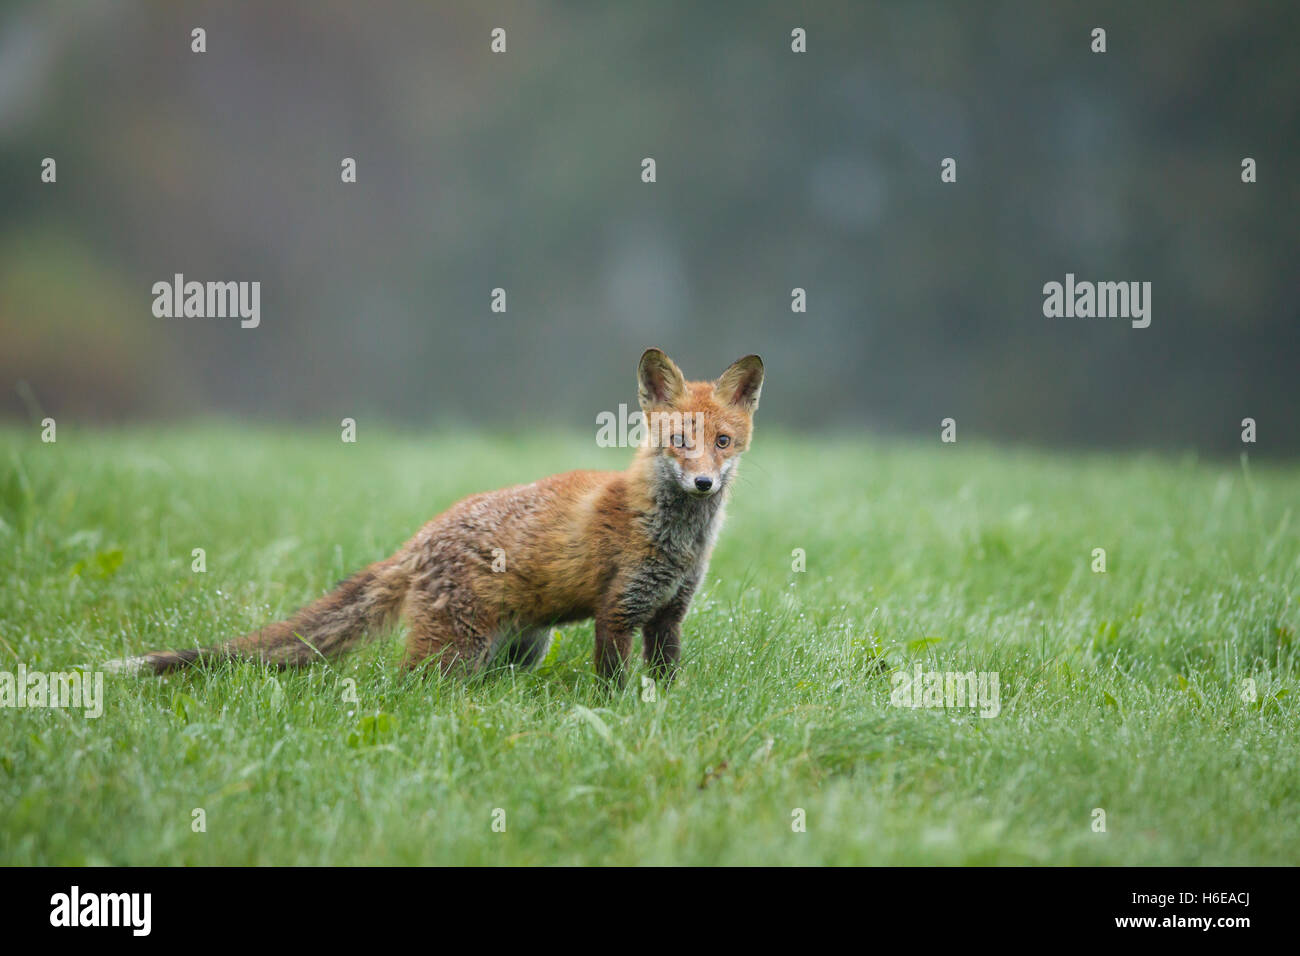 Rotfuchs, Vulpes vulpes, red fox Stock Photo